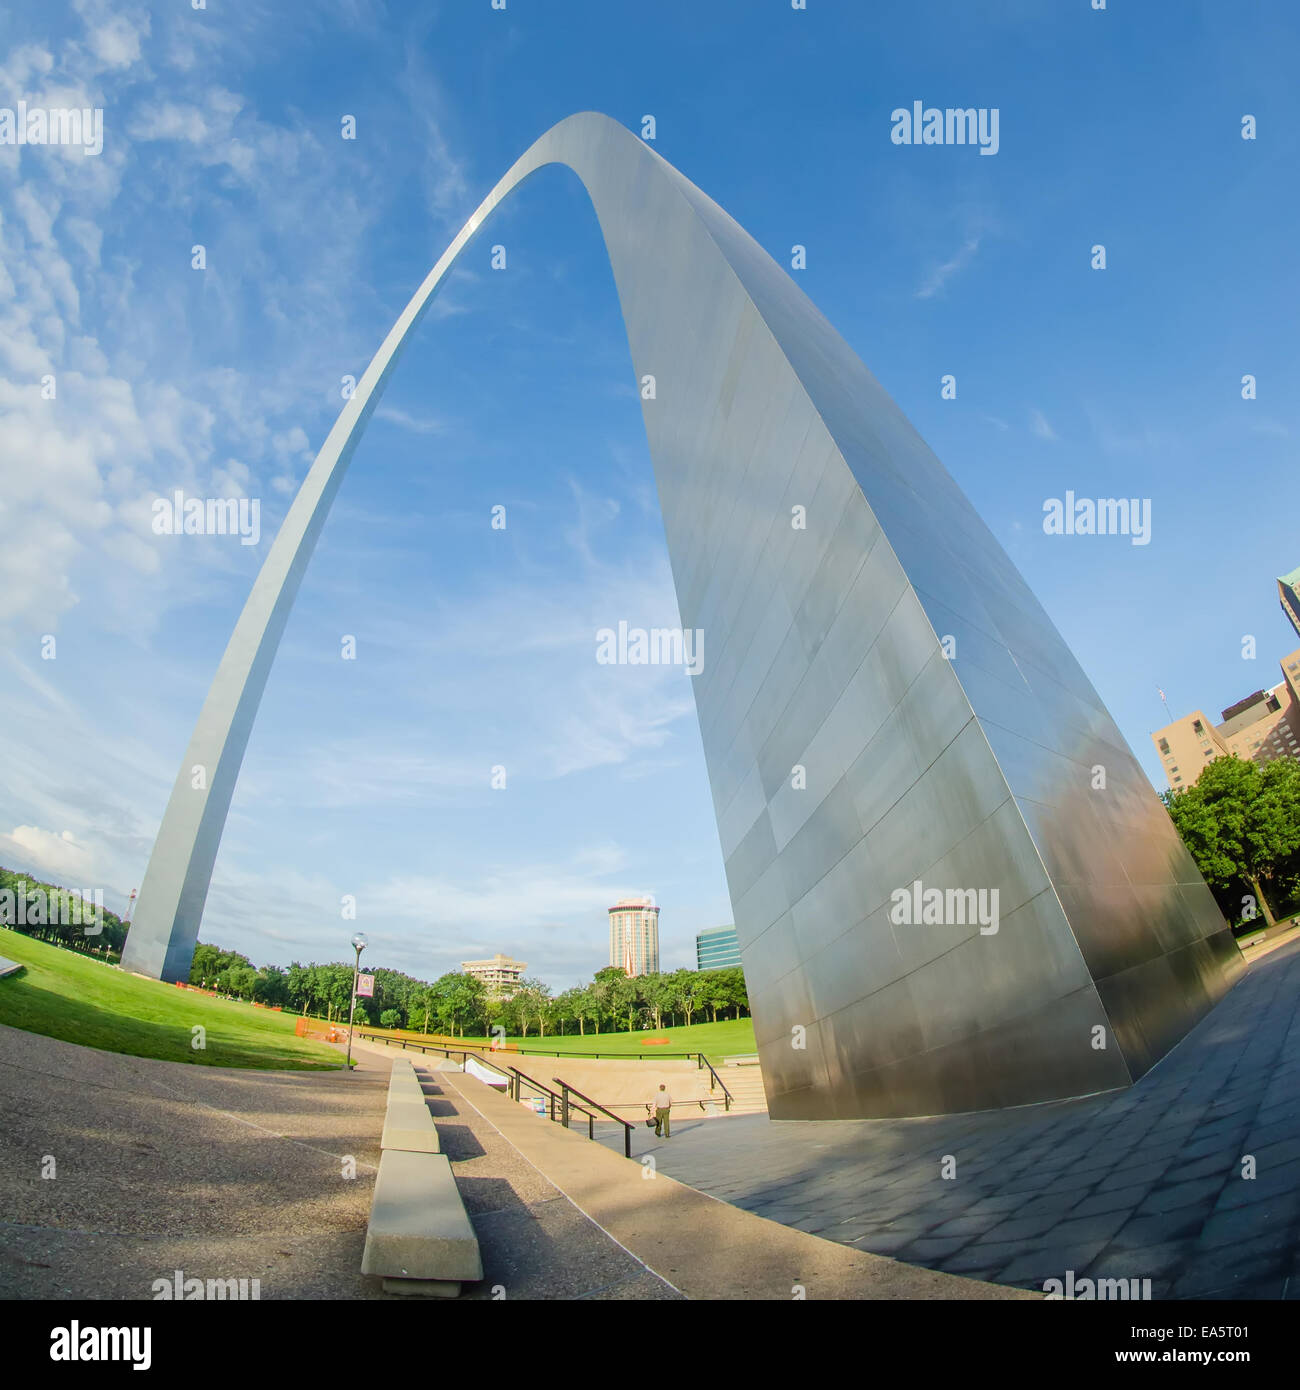 gateway arch sculpture in St Louis Missouri Stock Photo: 75116609 - Alamy